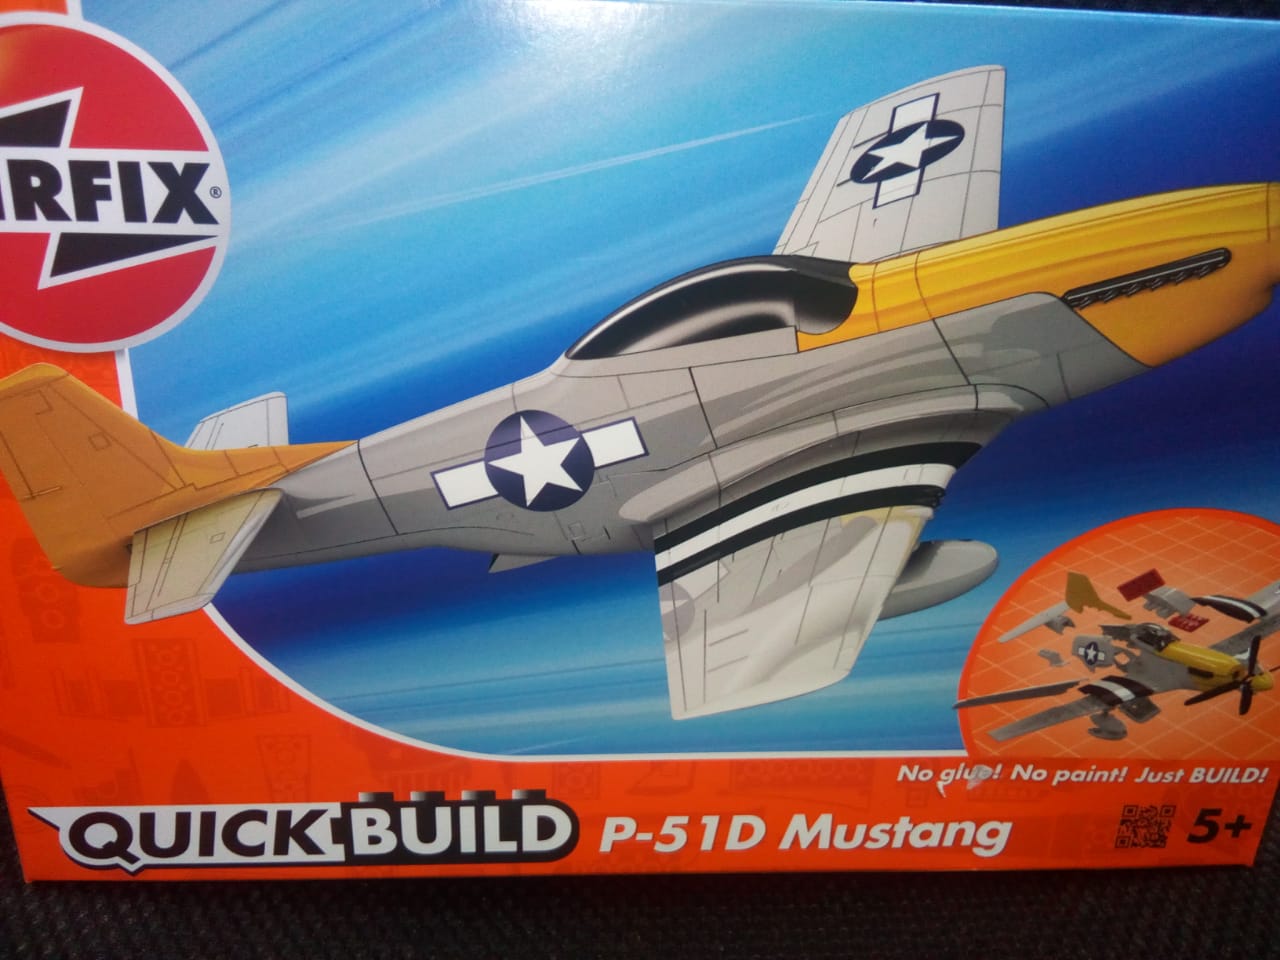 Quick buld P-51